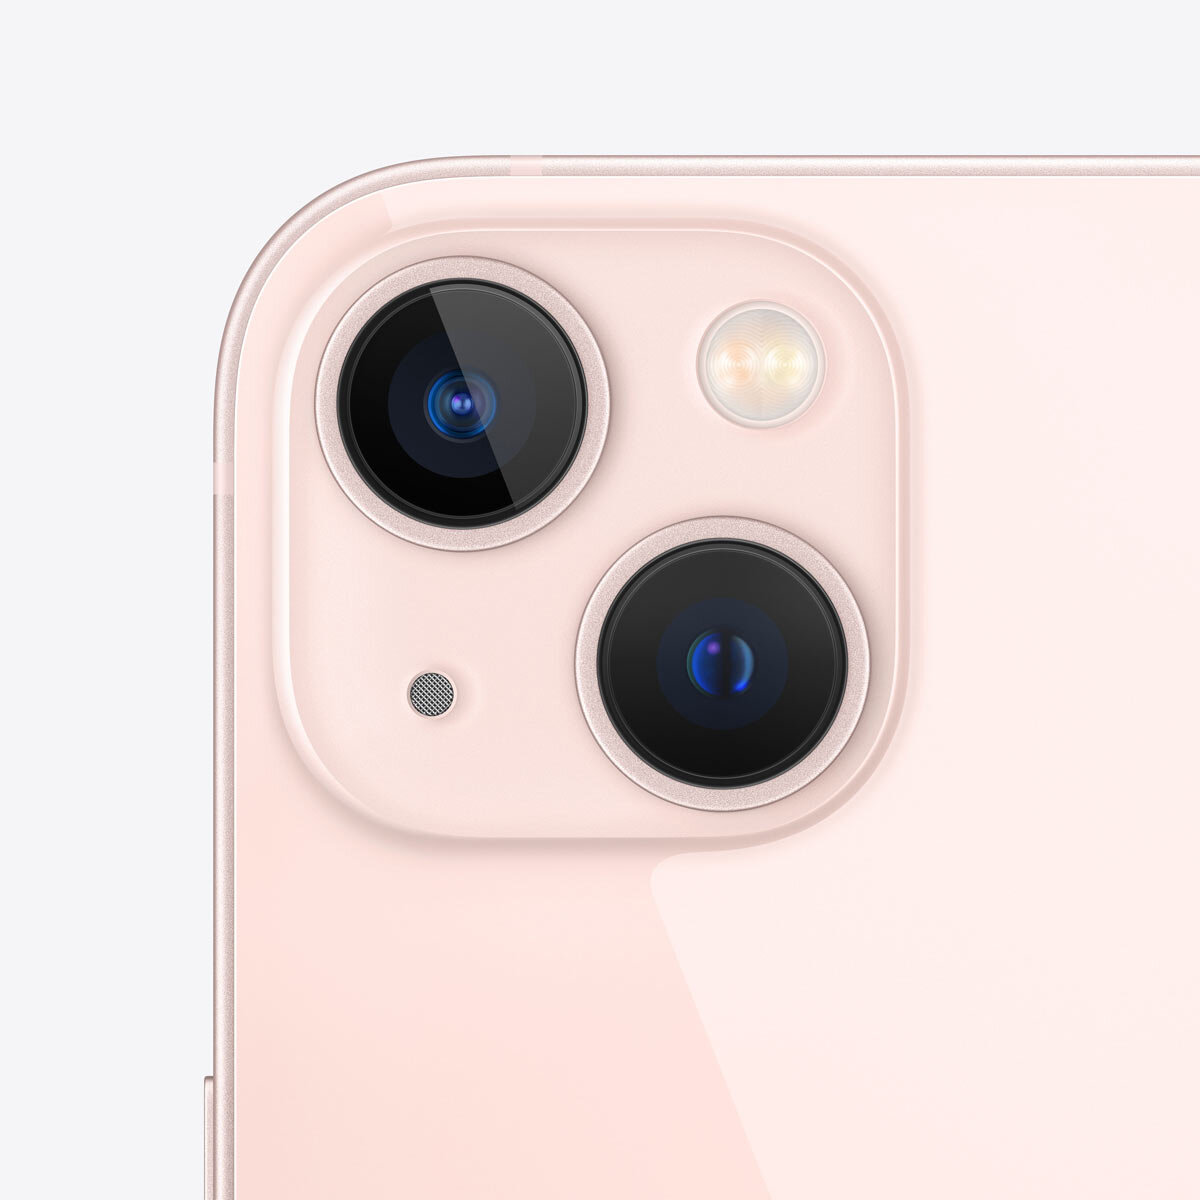 Buy Apple iPhone 13 mini 256GB Sim Free Mobile Phone in Pink, MLK73B/A at costco.co.uk